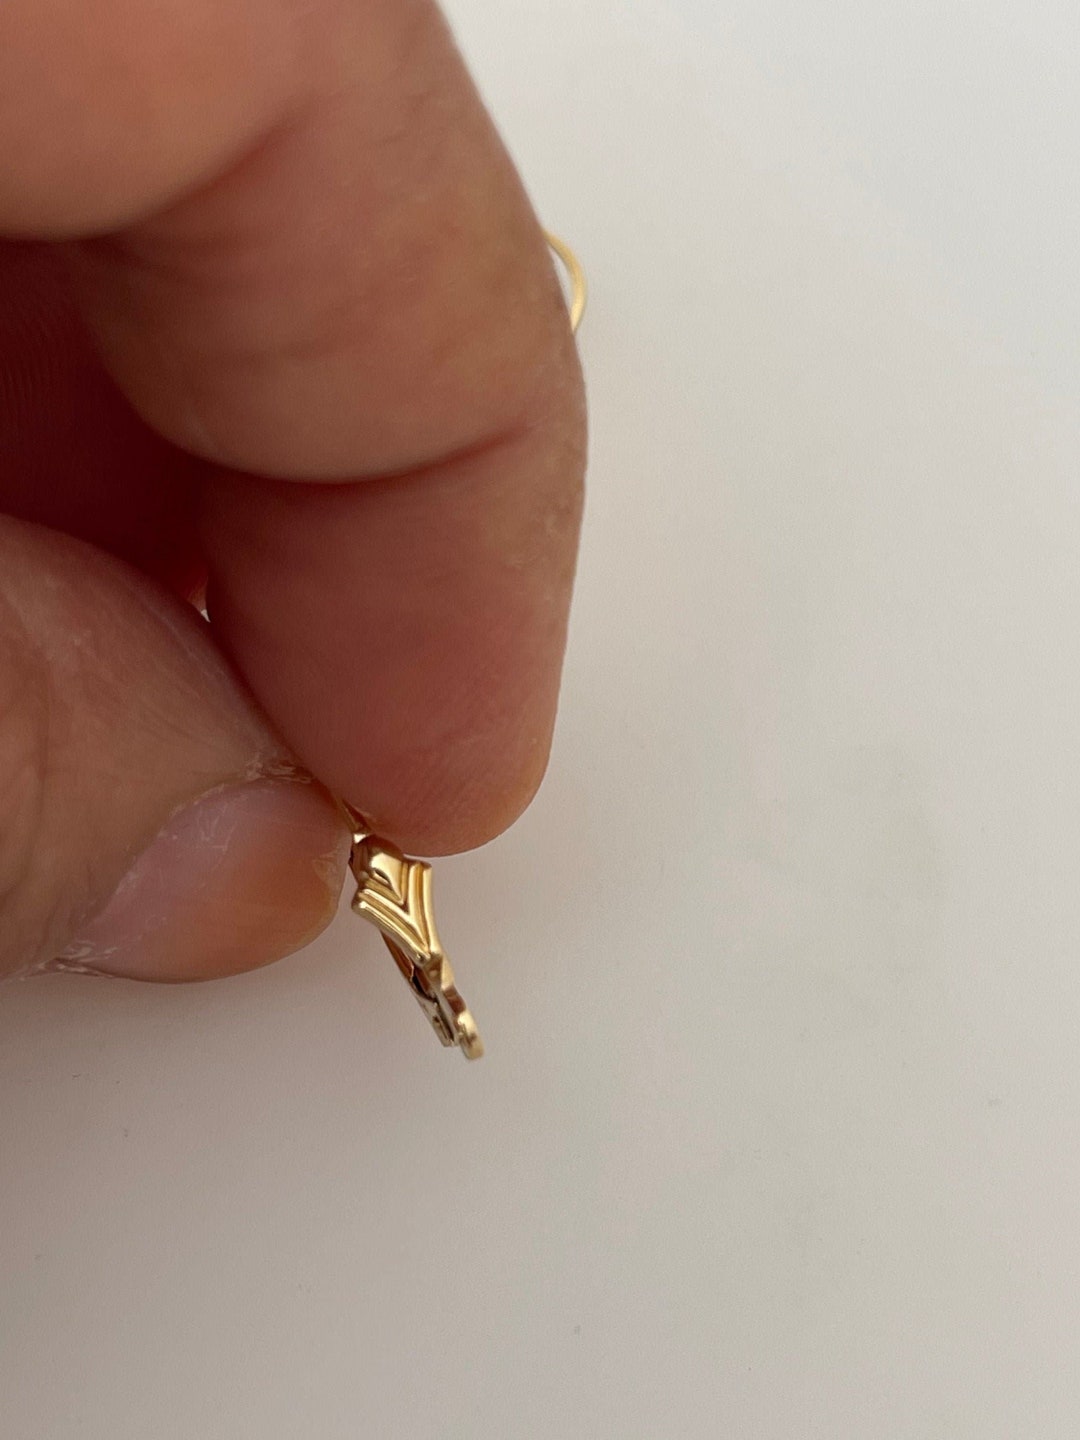 6pcs. 14K Real Gold Filled L Fleur De Lis Lever Back Ear Rings Size ...